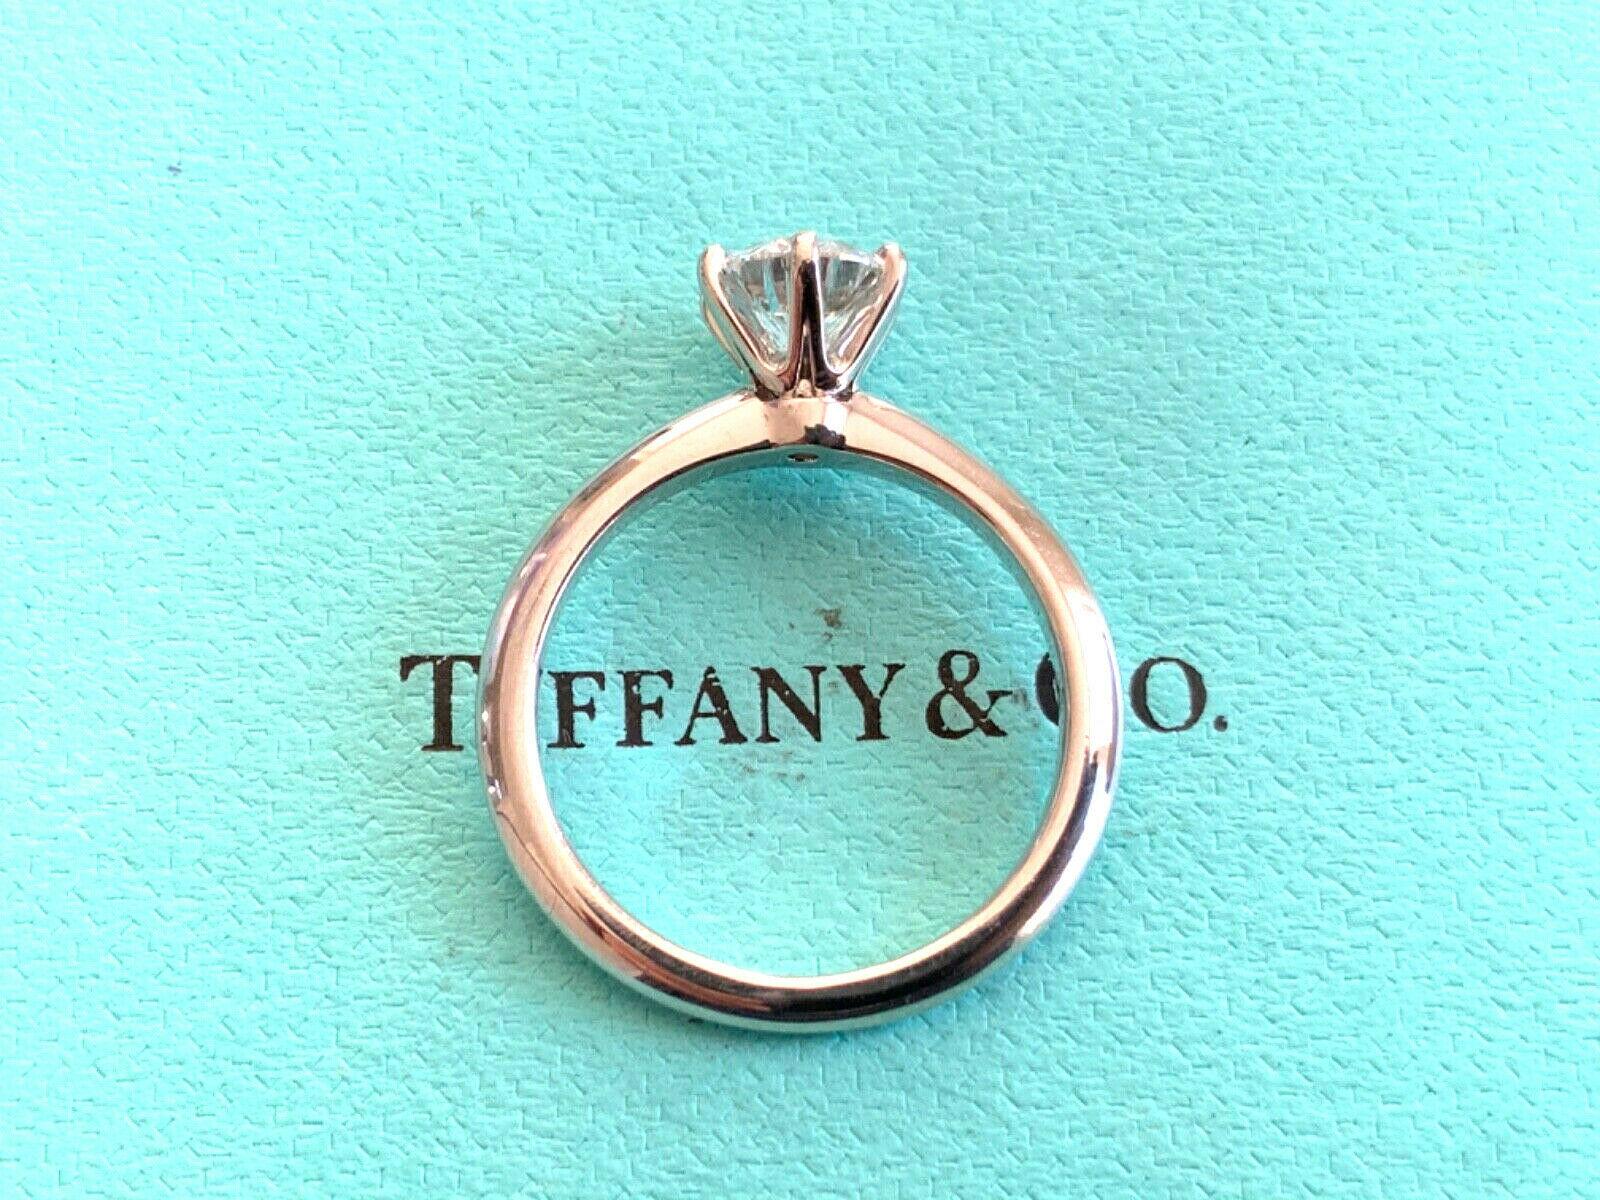 Tiffany & Co. Platinum Diamond .92 Carat Round Ring G VVS2 Triple Excellent Cut For Sale 9